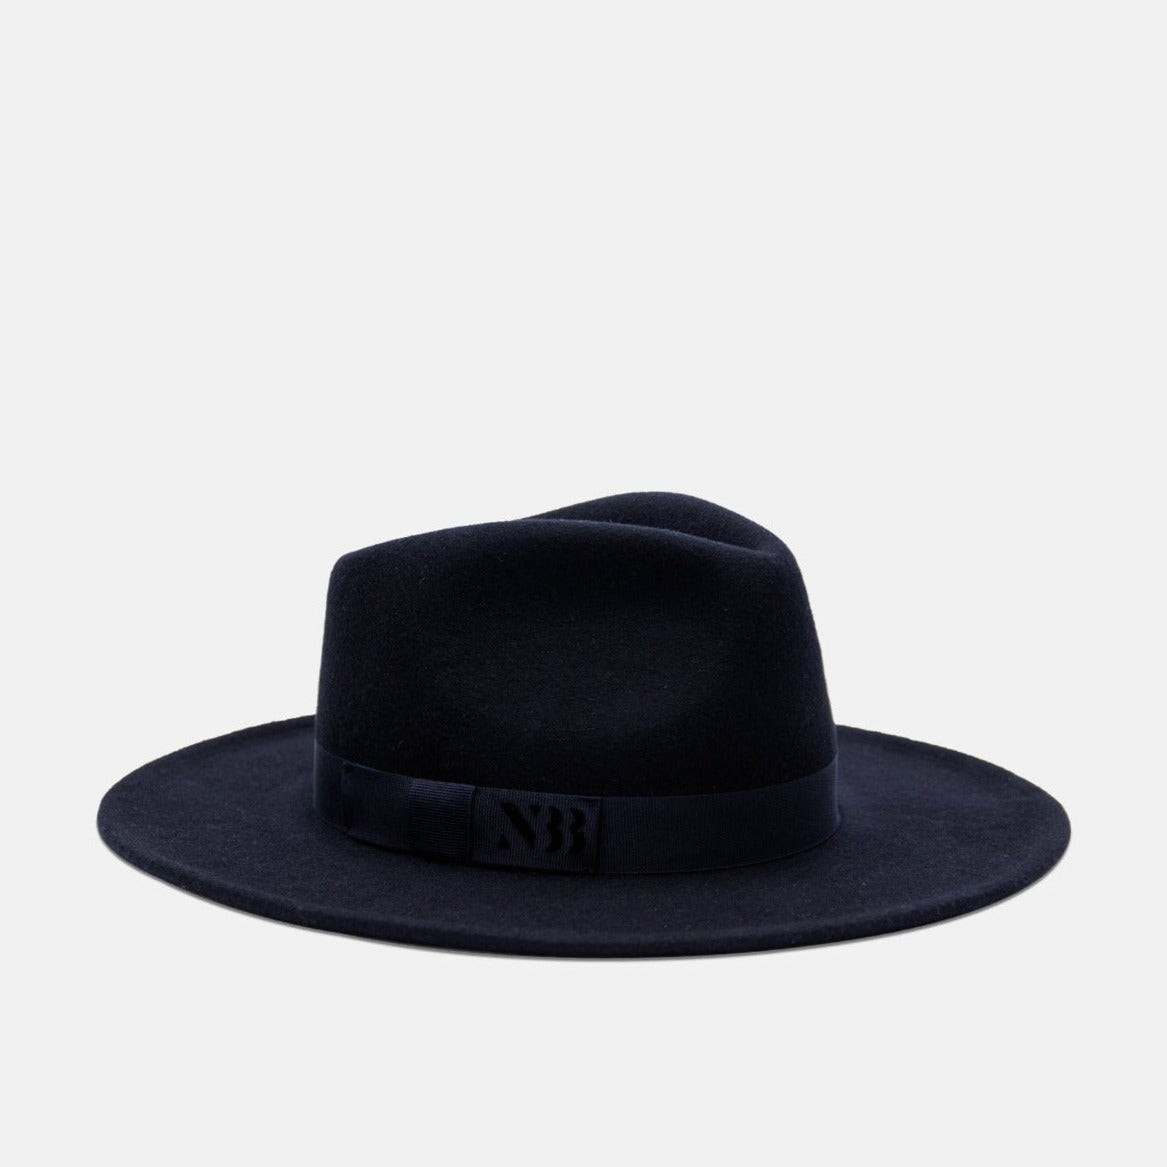 NTHIRTYTHREE - N33 - Fedora Felt Hat - Signature Midnight Blue - handmade in Europe